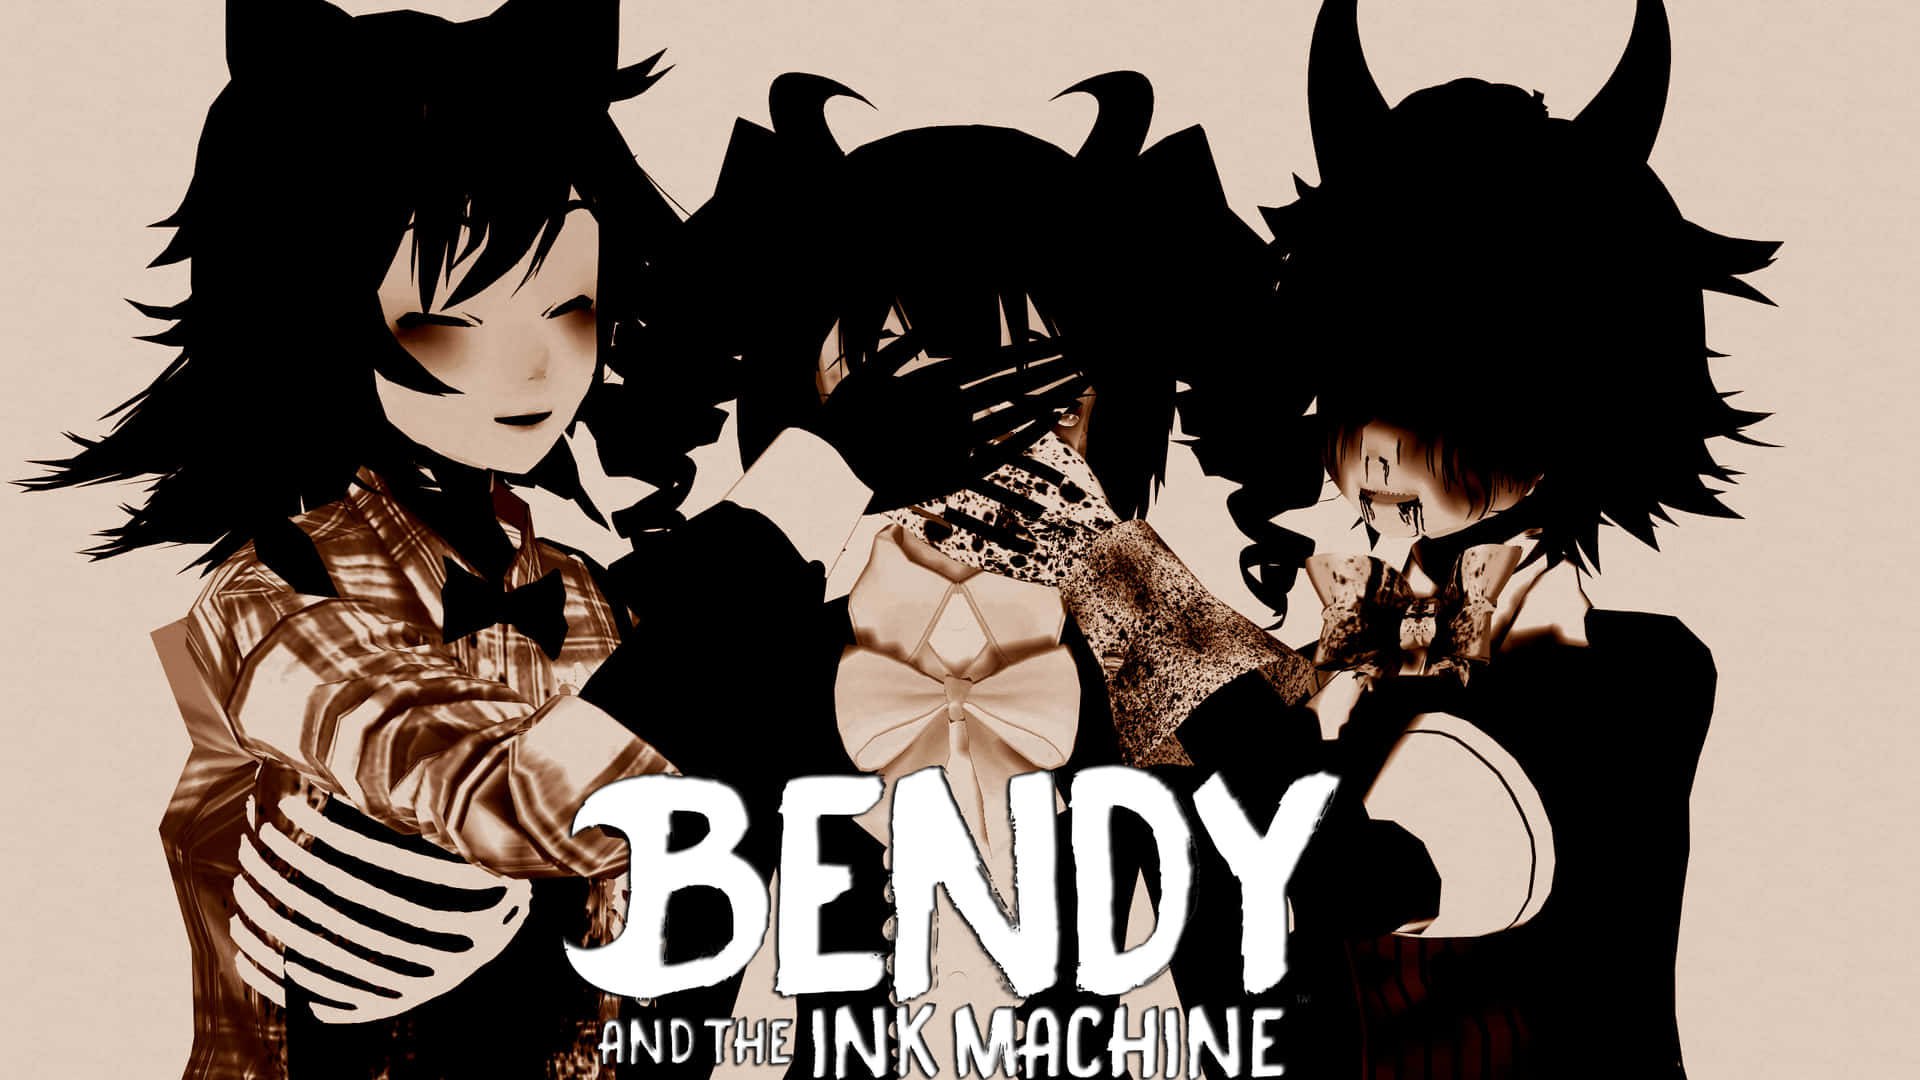 Bendyand The Ink Machine Digital Konst. Wallpaper